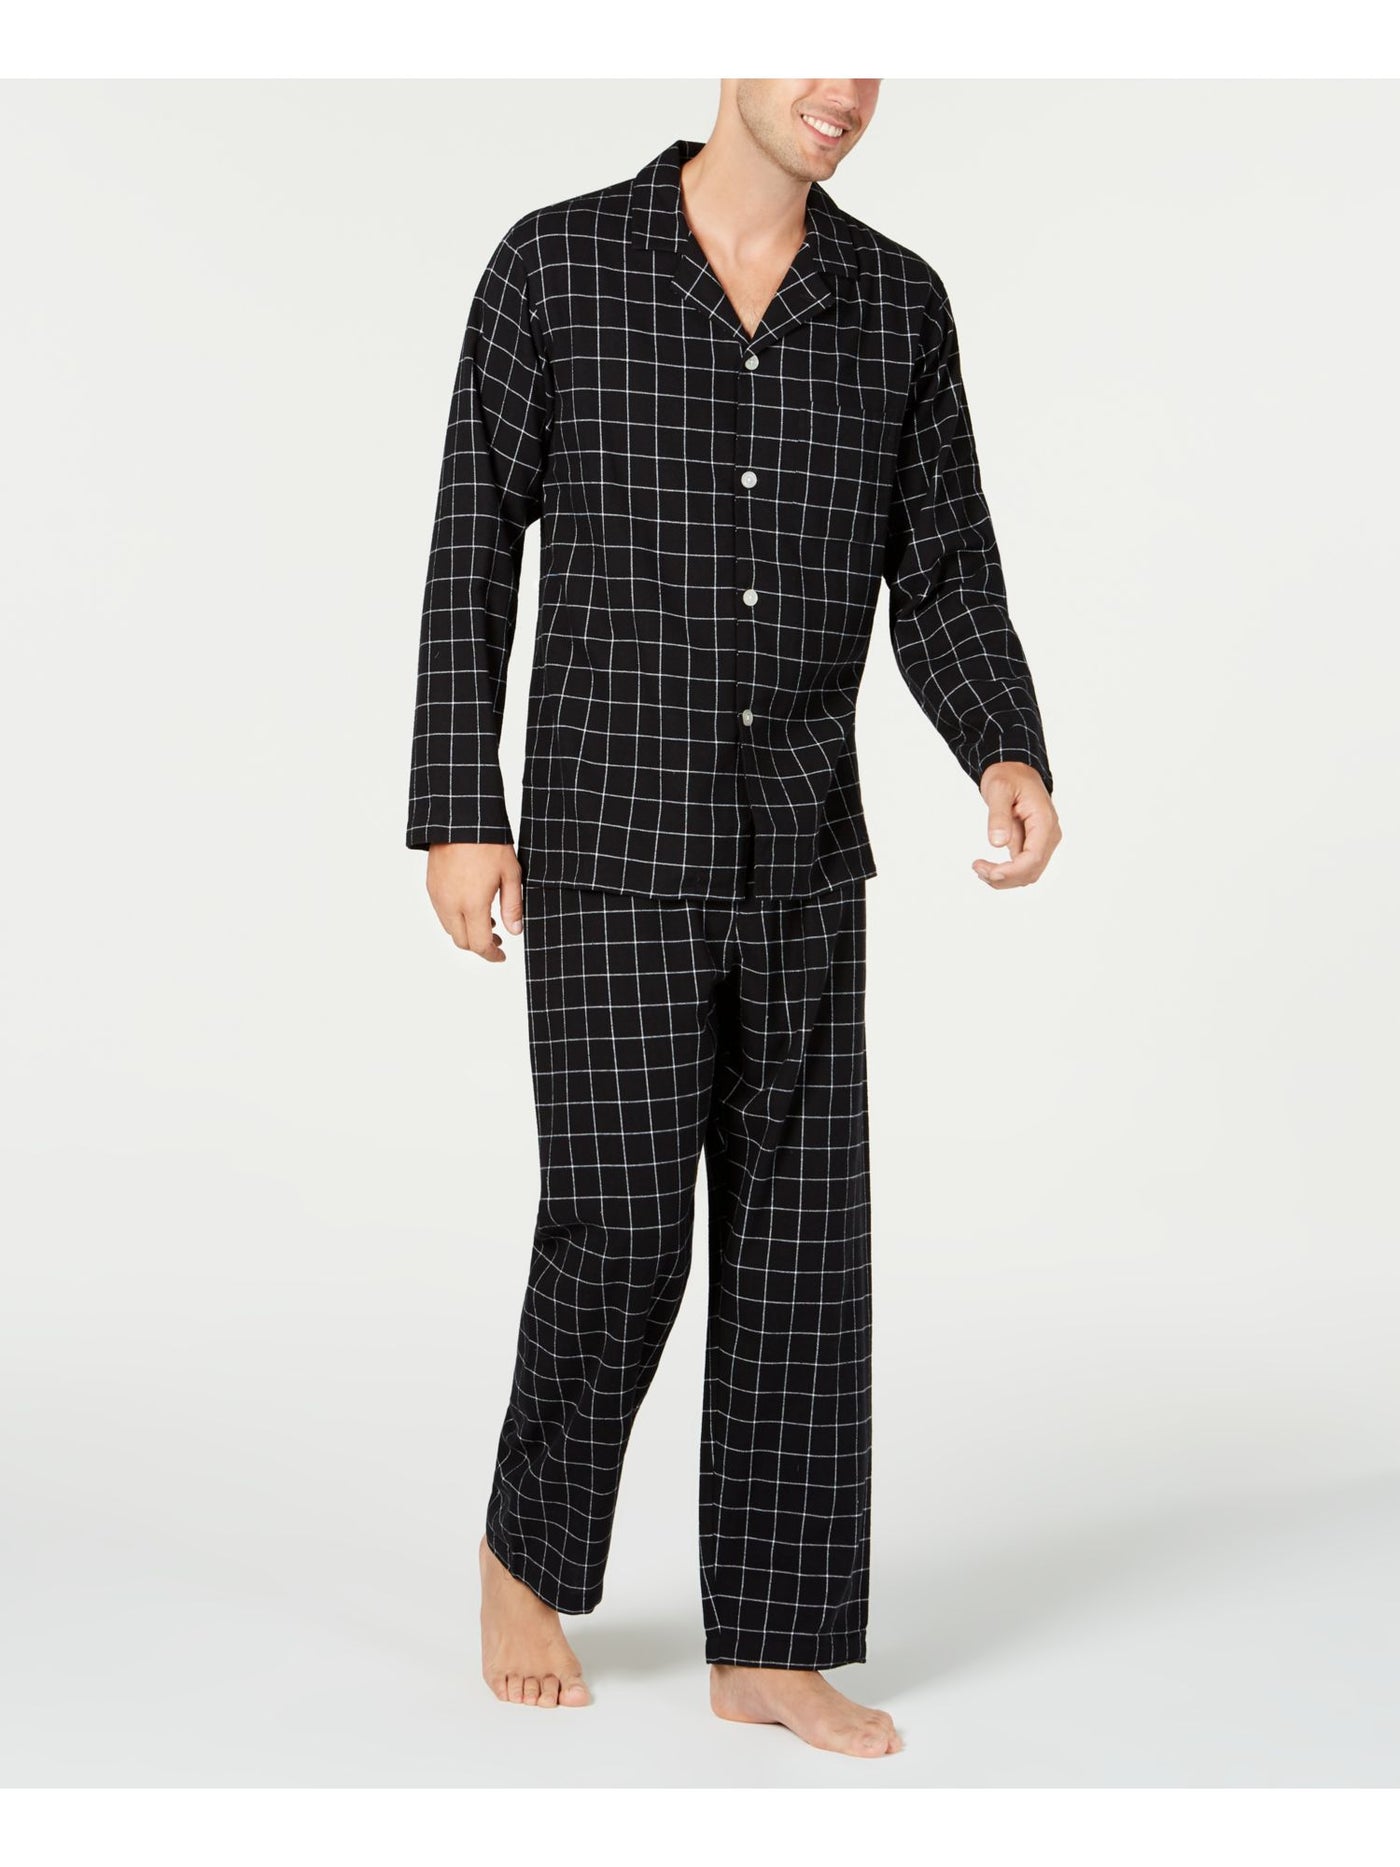 CHARTER CLUB Mens Black Plaid Long Sleeve Button Up Top Straight leg Pants Pajamas S